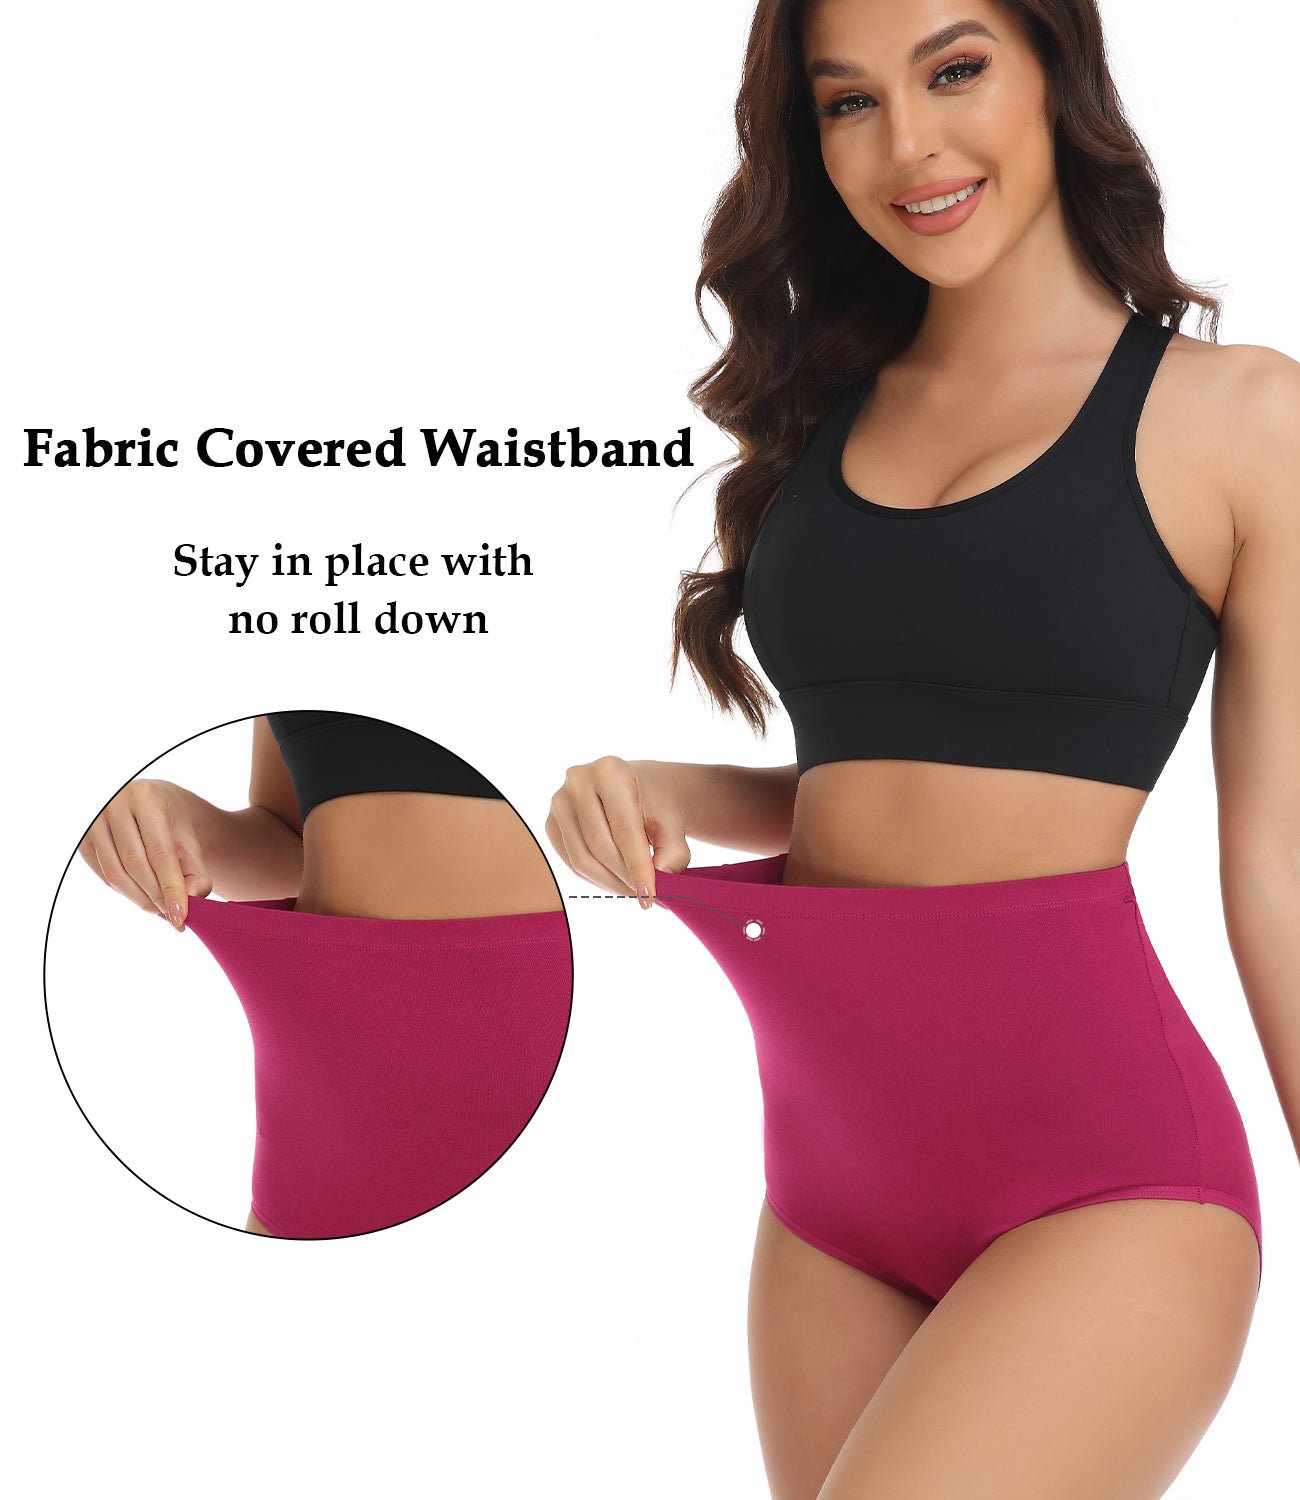 wirarpa Women's Cotton Underwear 4 Pack High Waisted Full Coverage